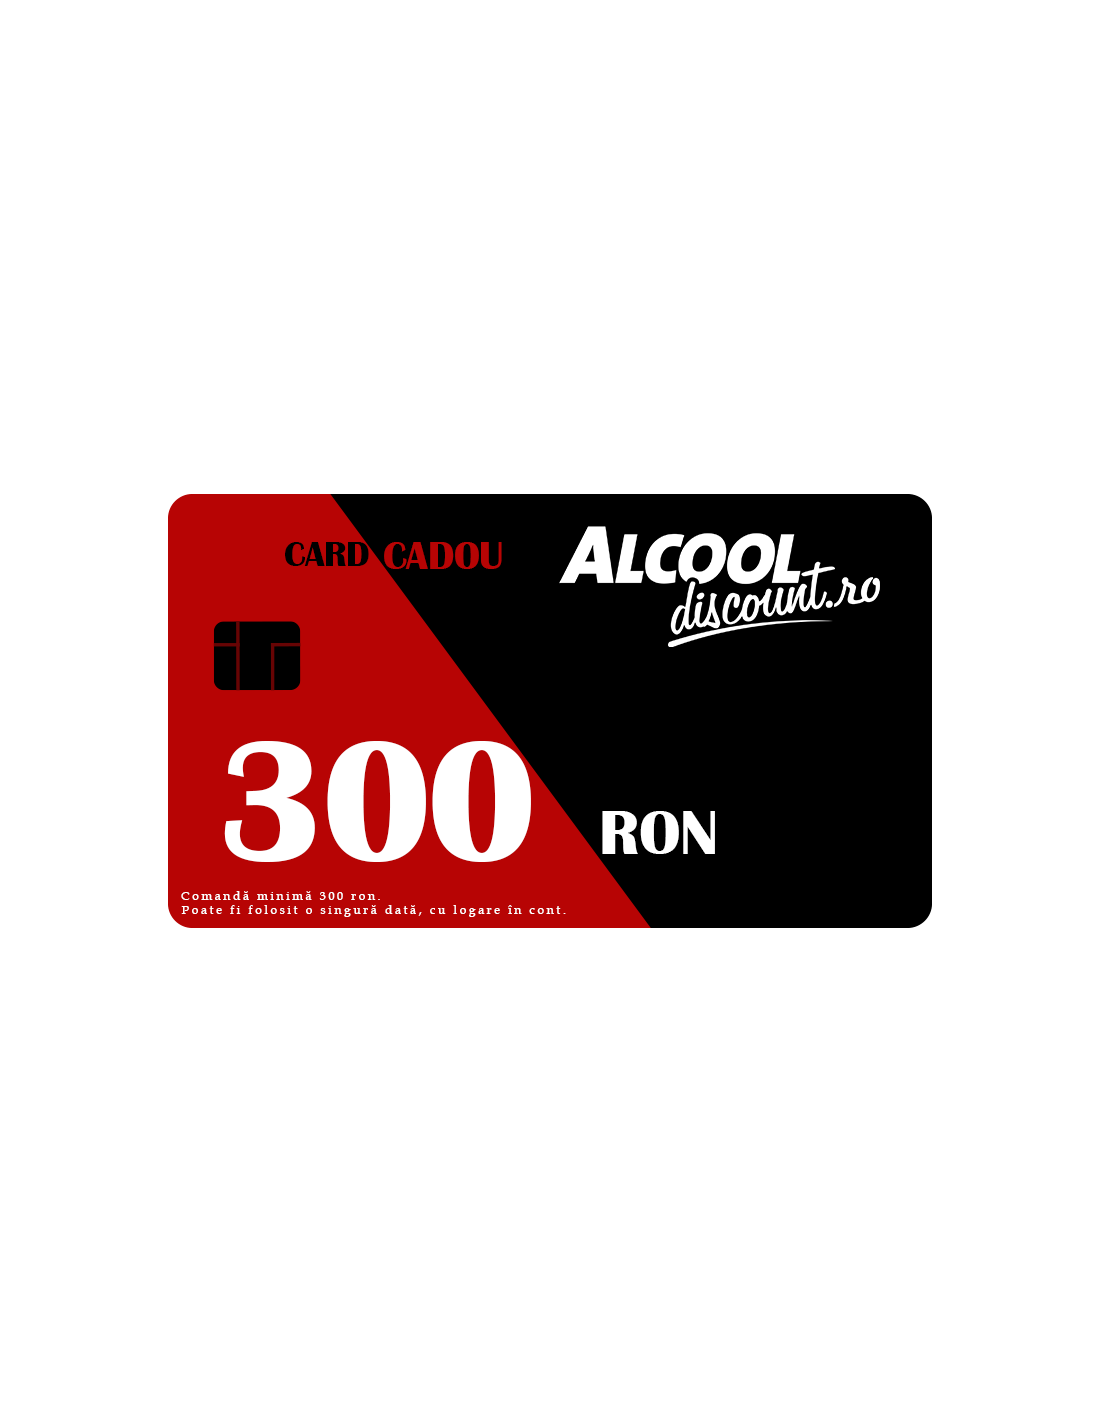 CARD CADOU 300 RON alcooldiscount.ro